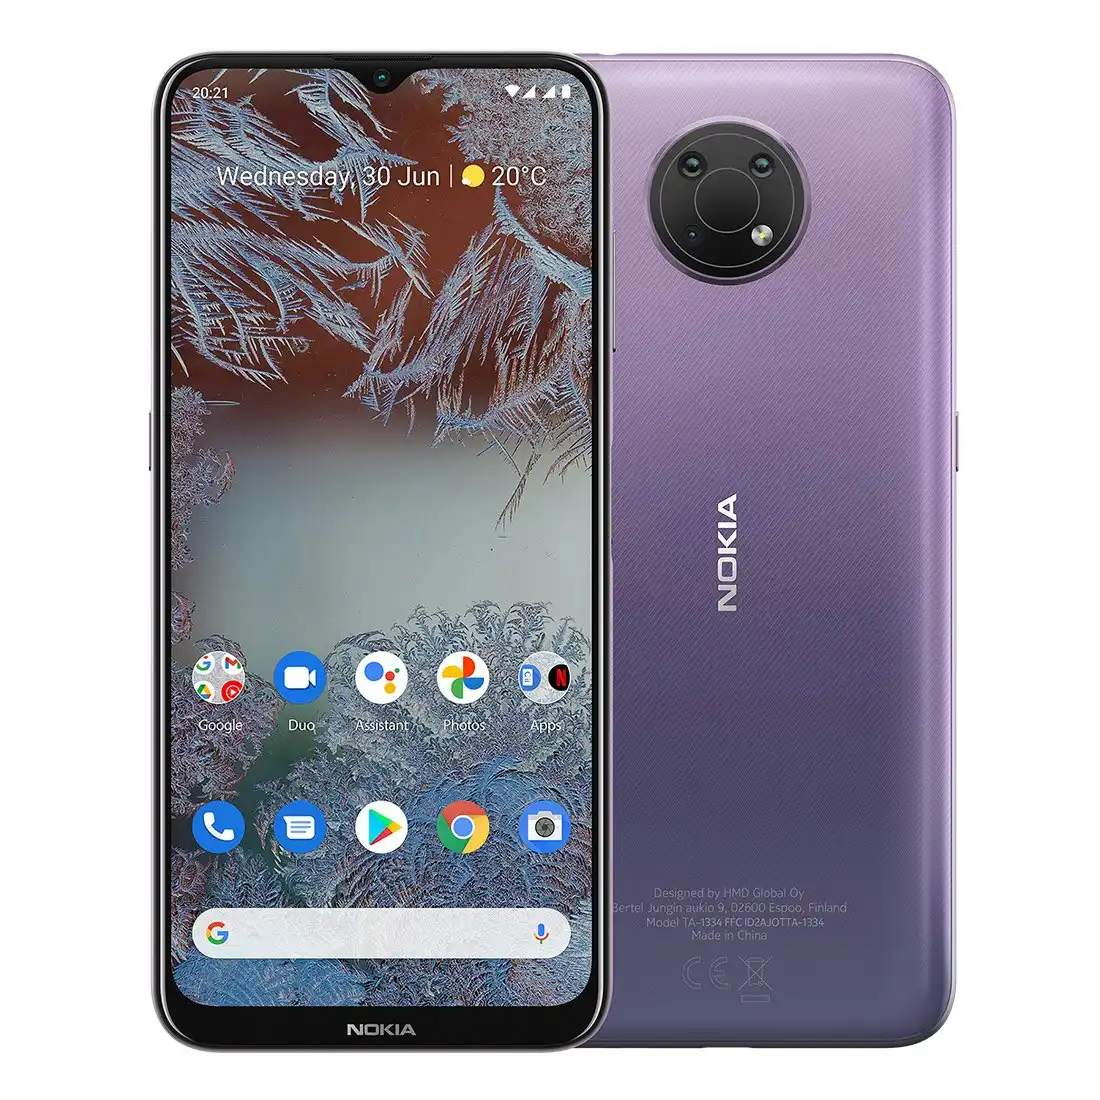 Nokia G10 3/32GB Purple [Open Box] - As New